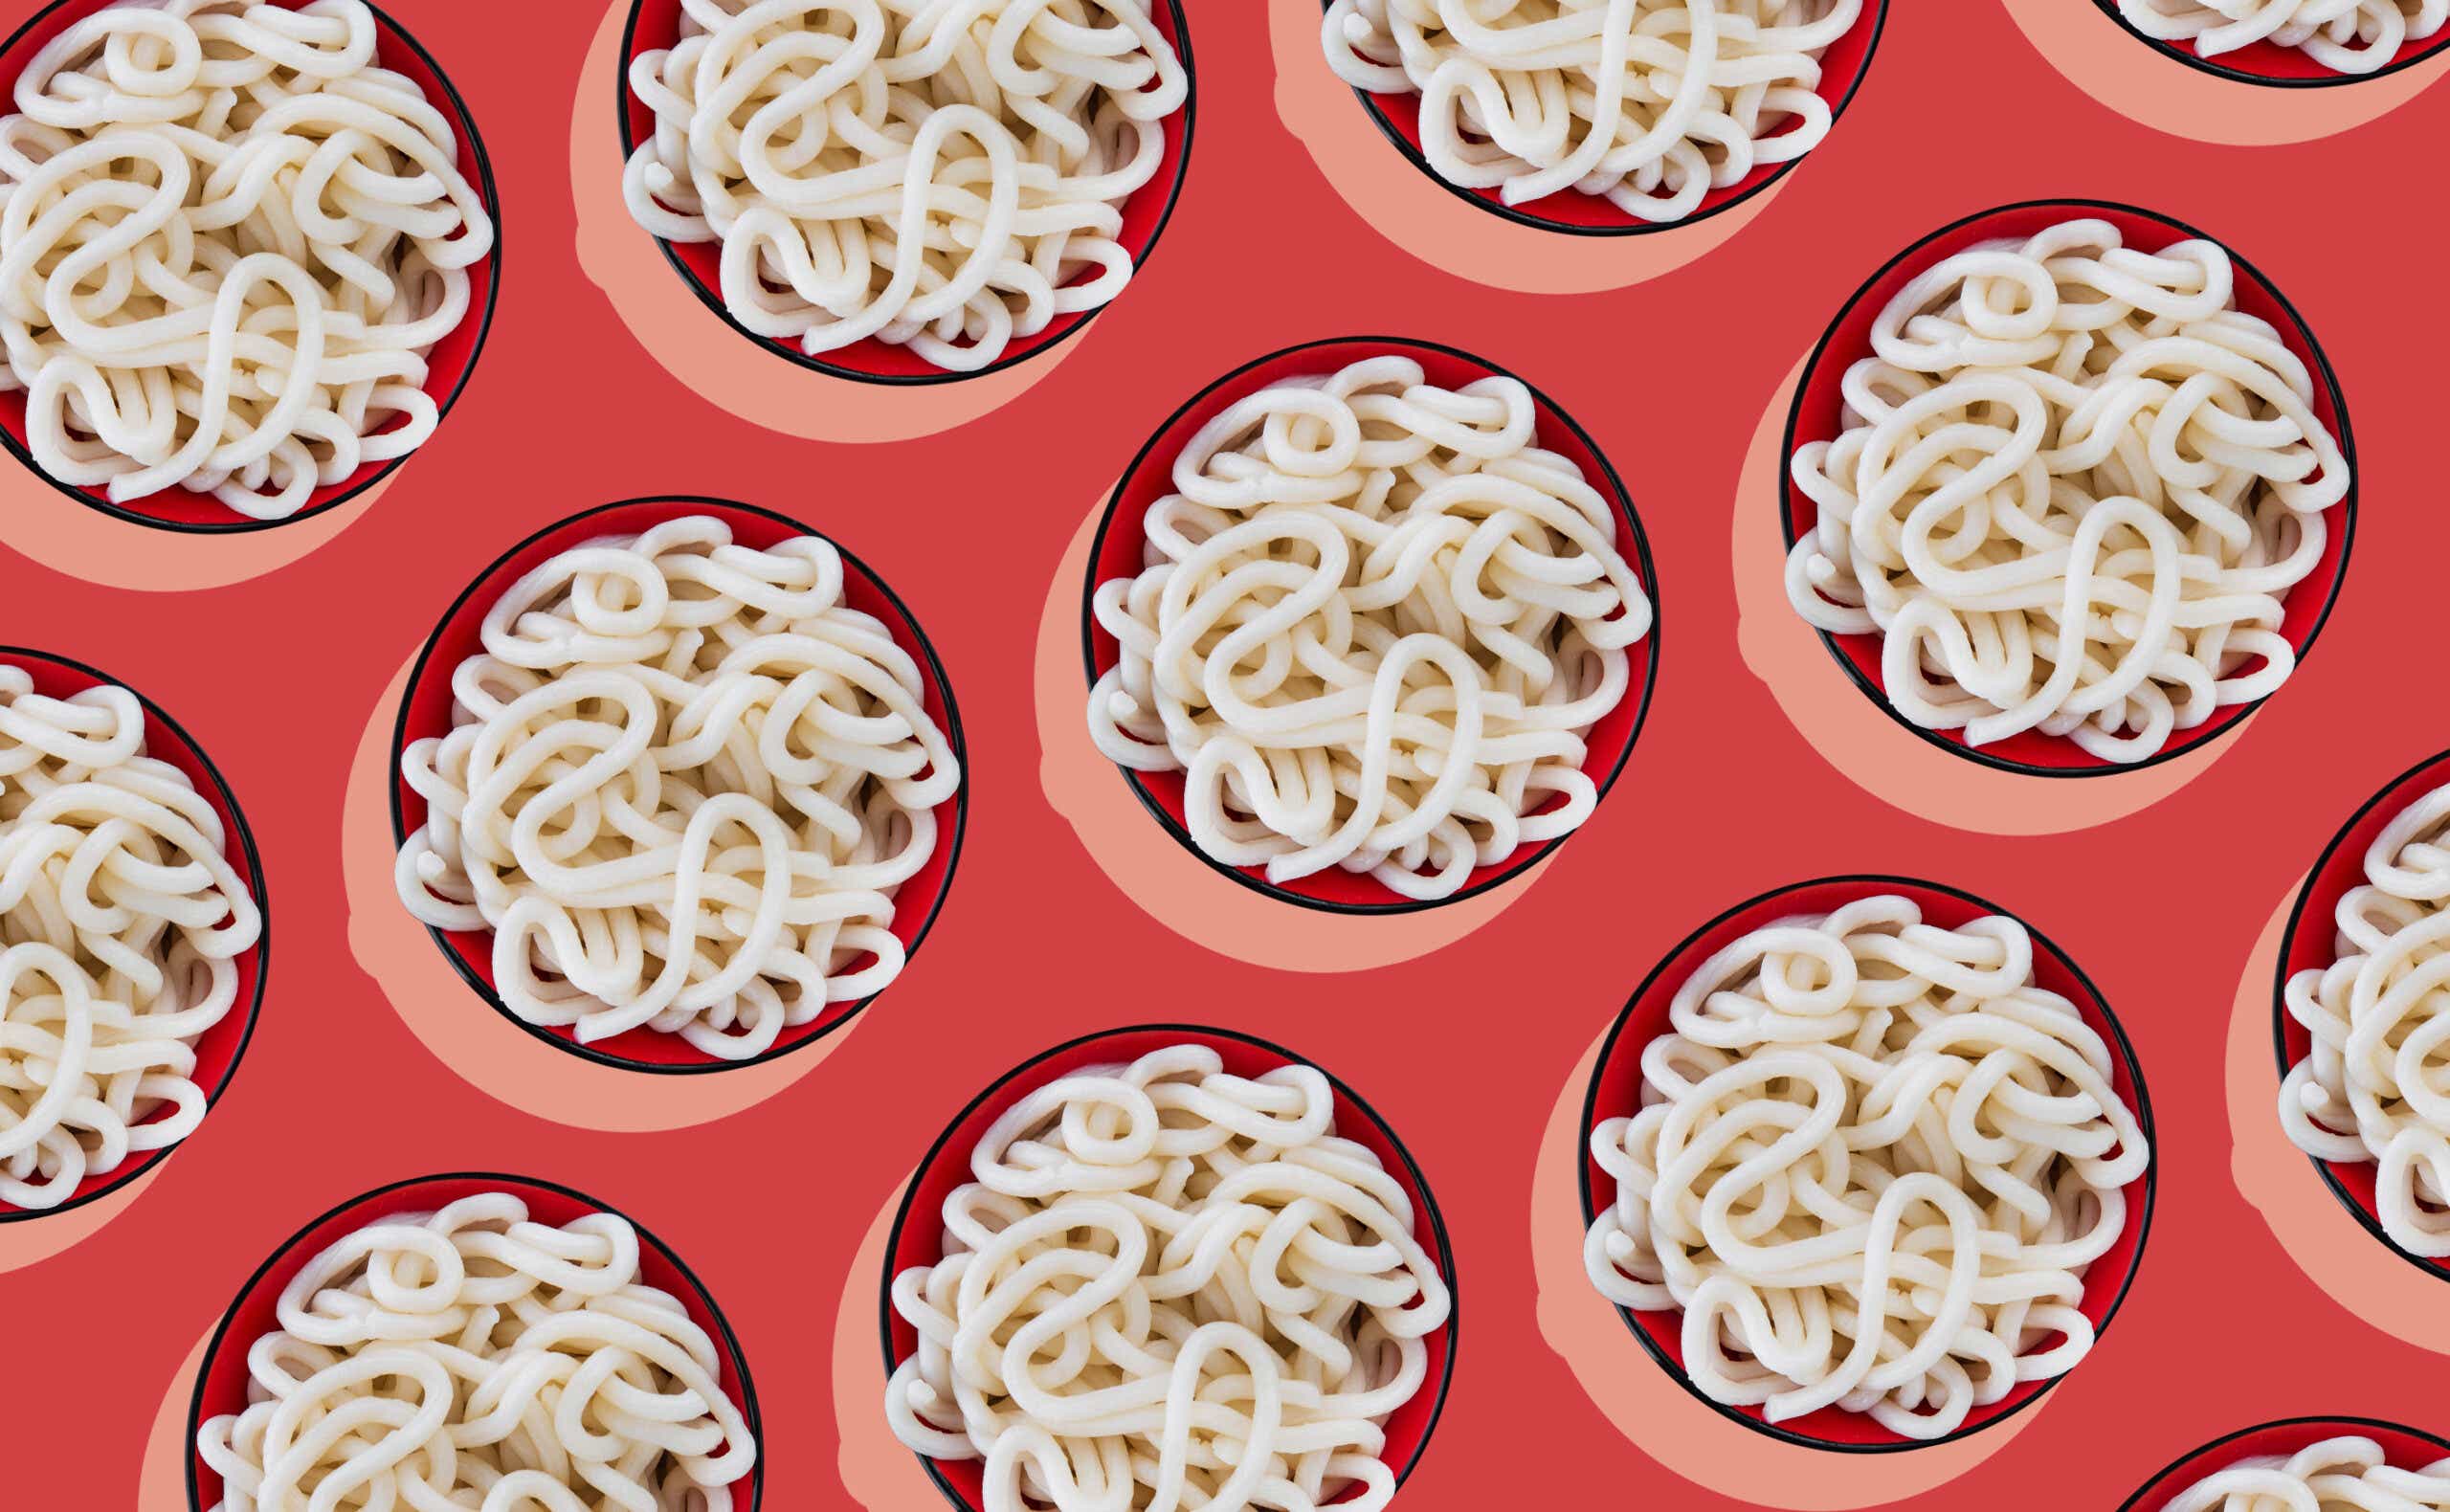 udon noodles on red background